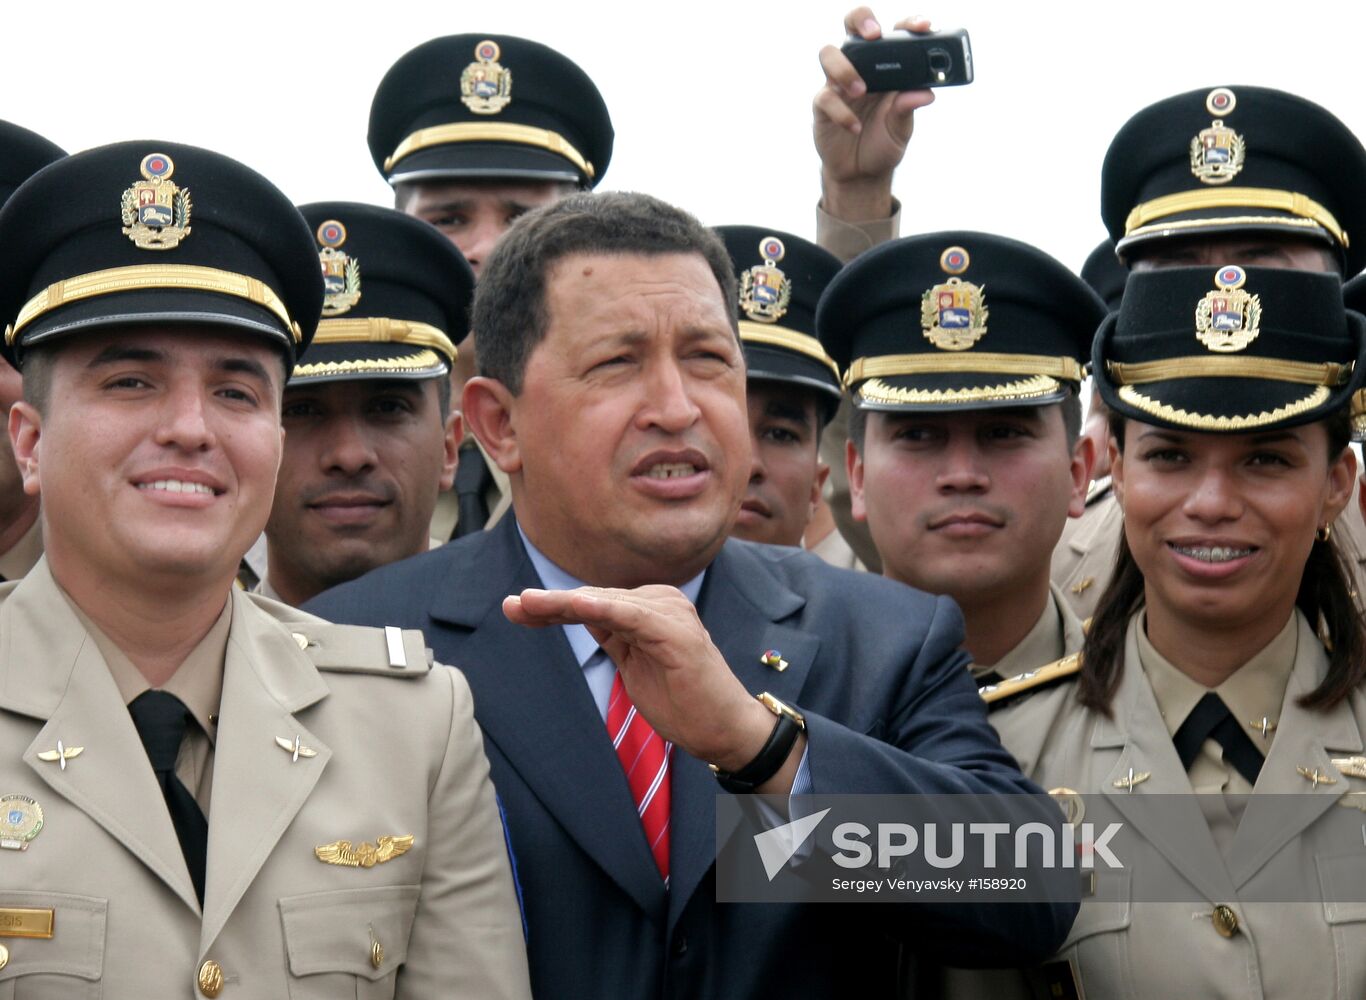 VENEZUELAN PRESIDENT HUGO CHAVEZ 